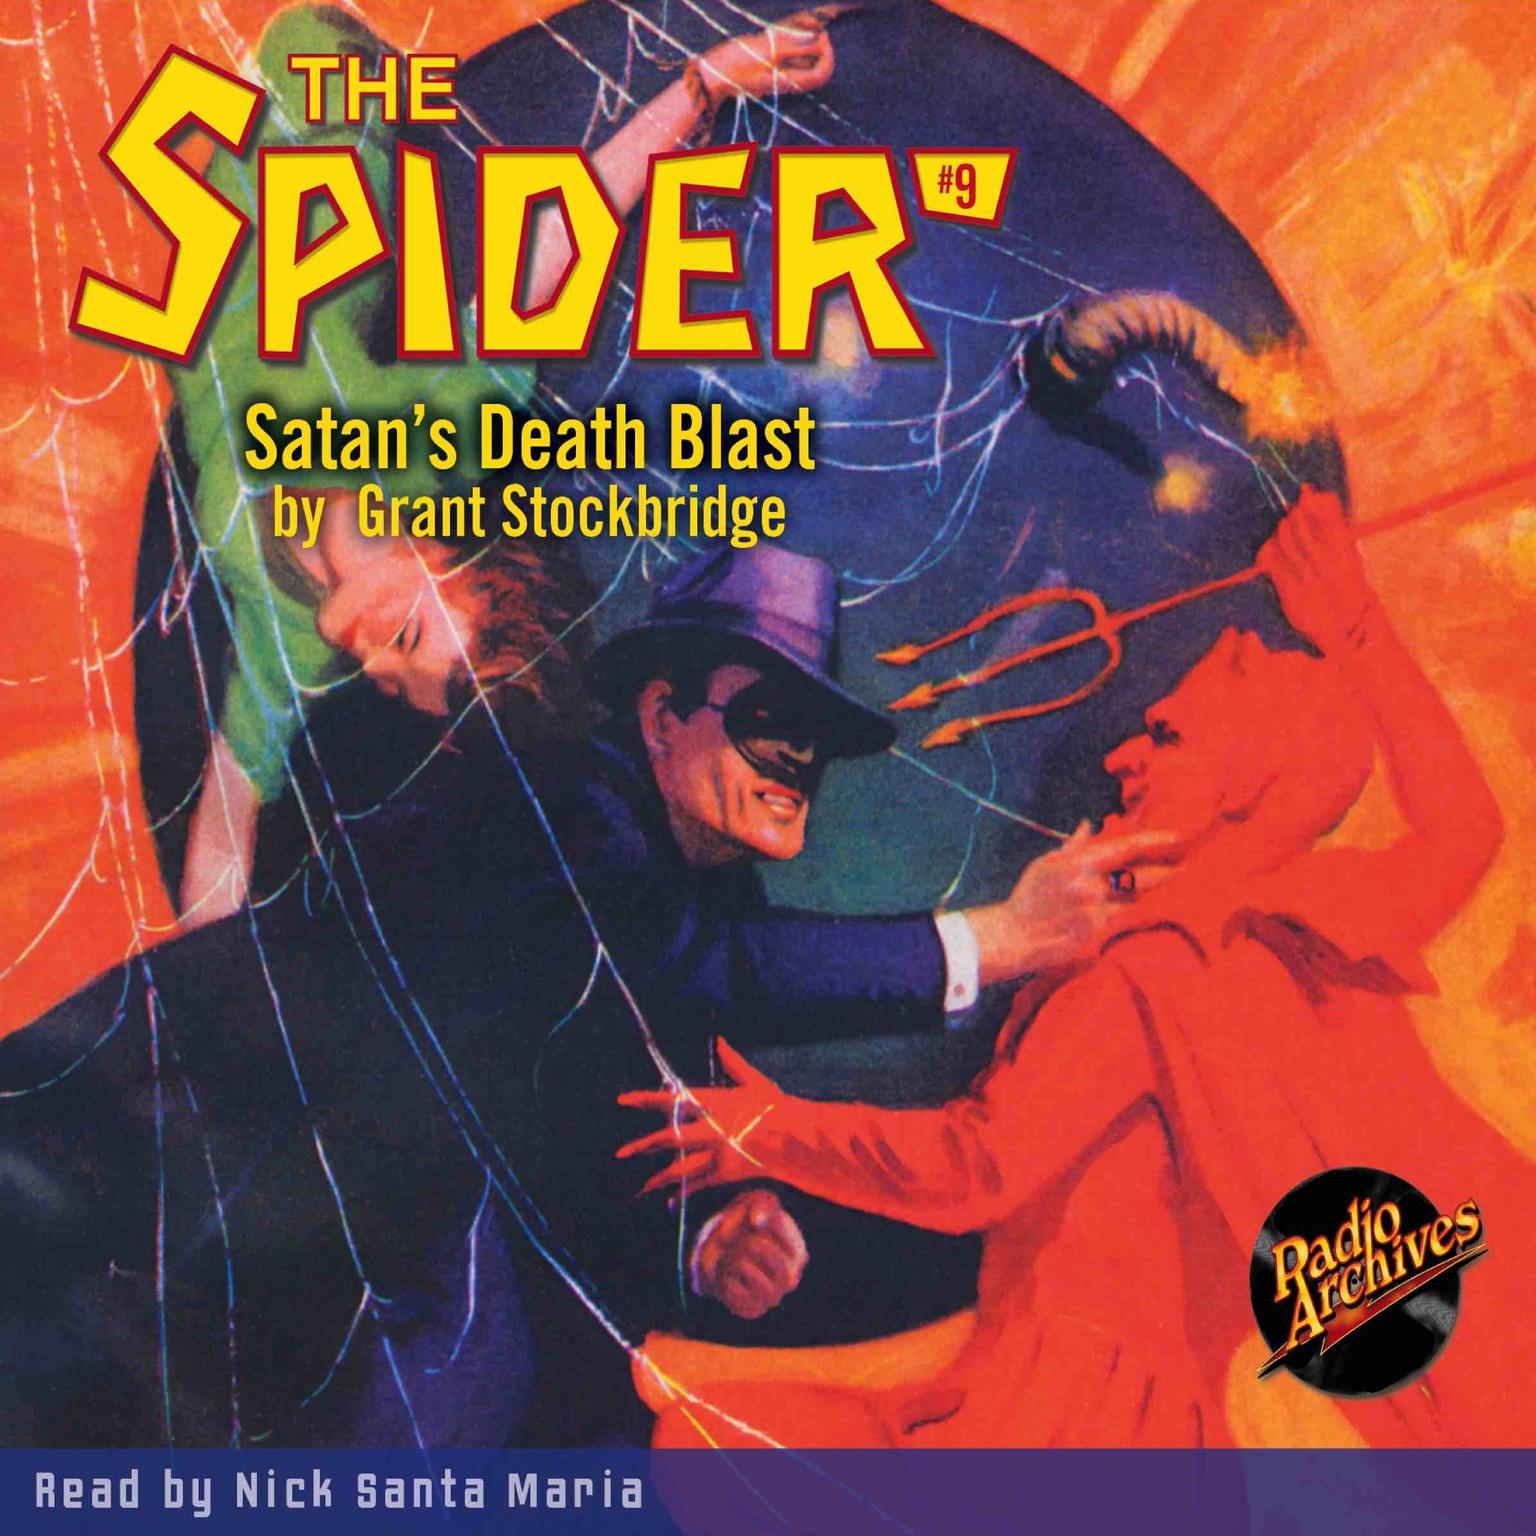 Spider #9, The: Satans Death Blast Audiobook, by Grant Stockbridge